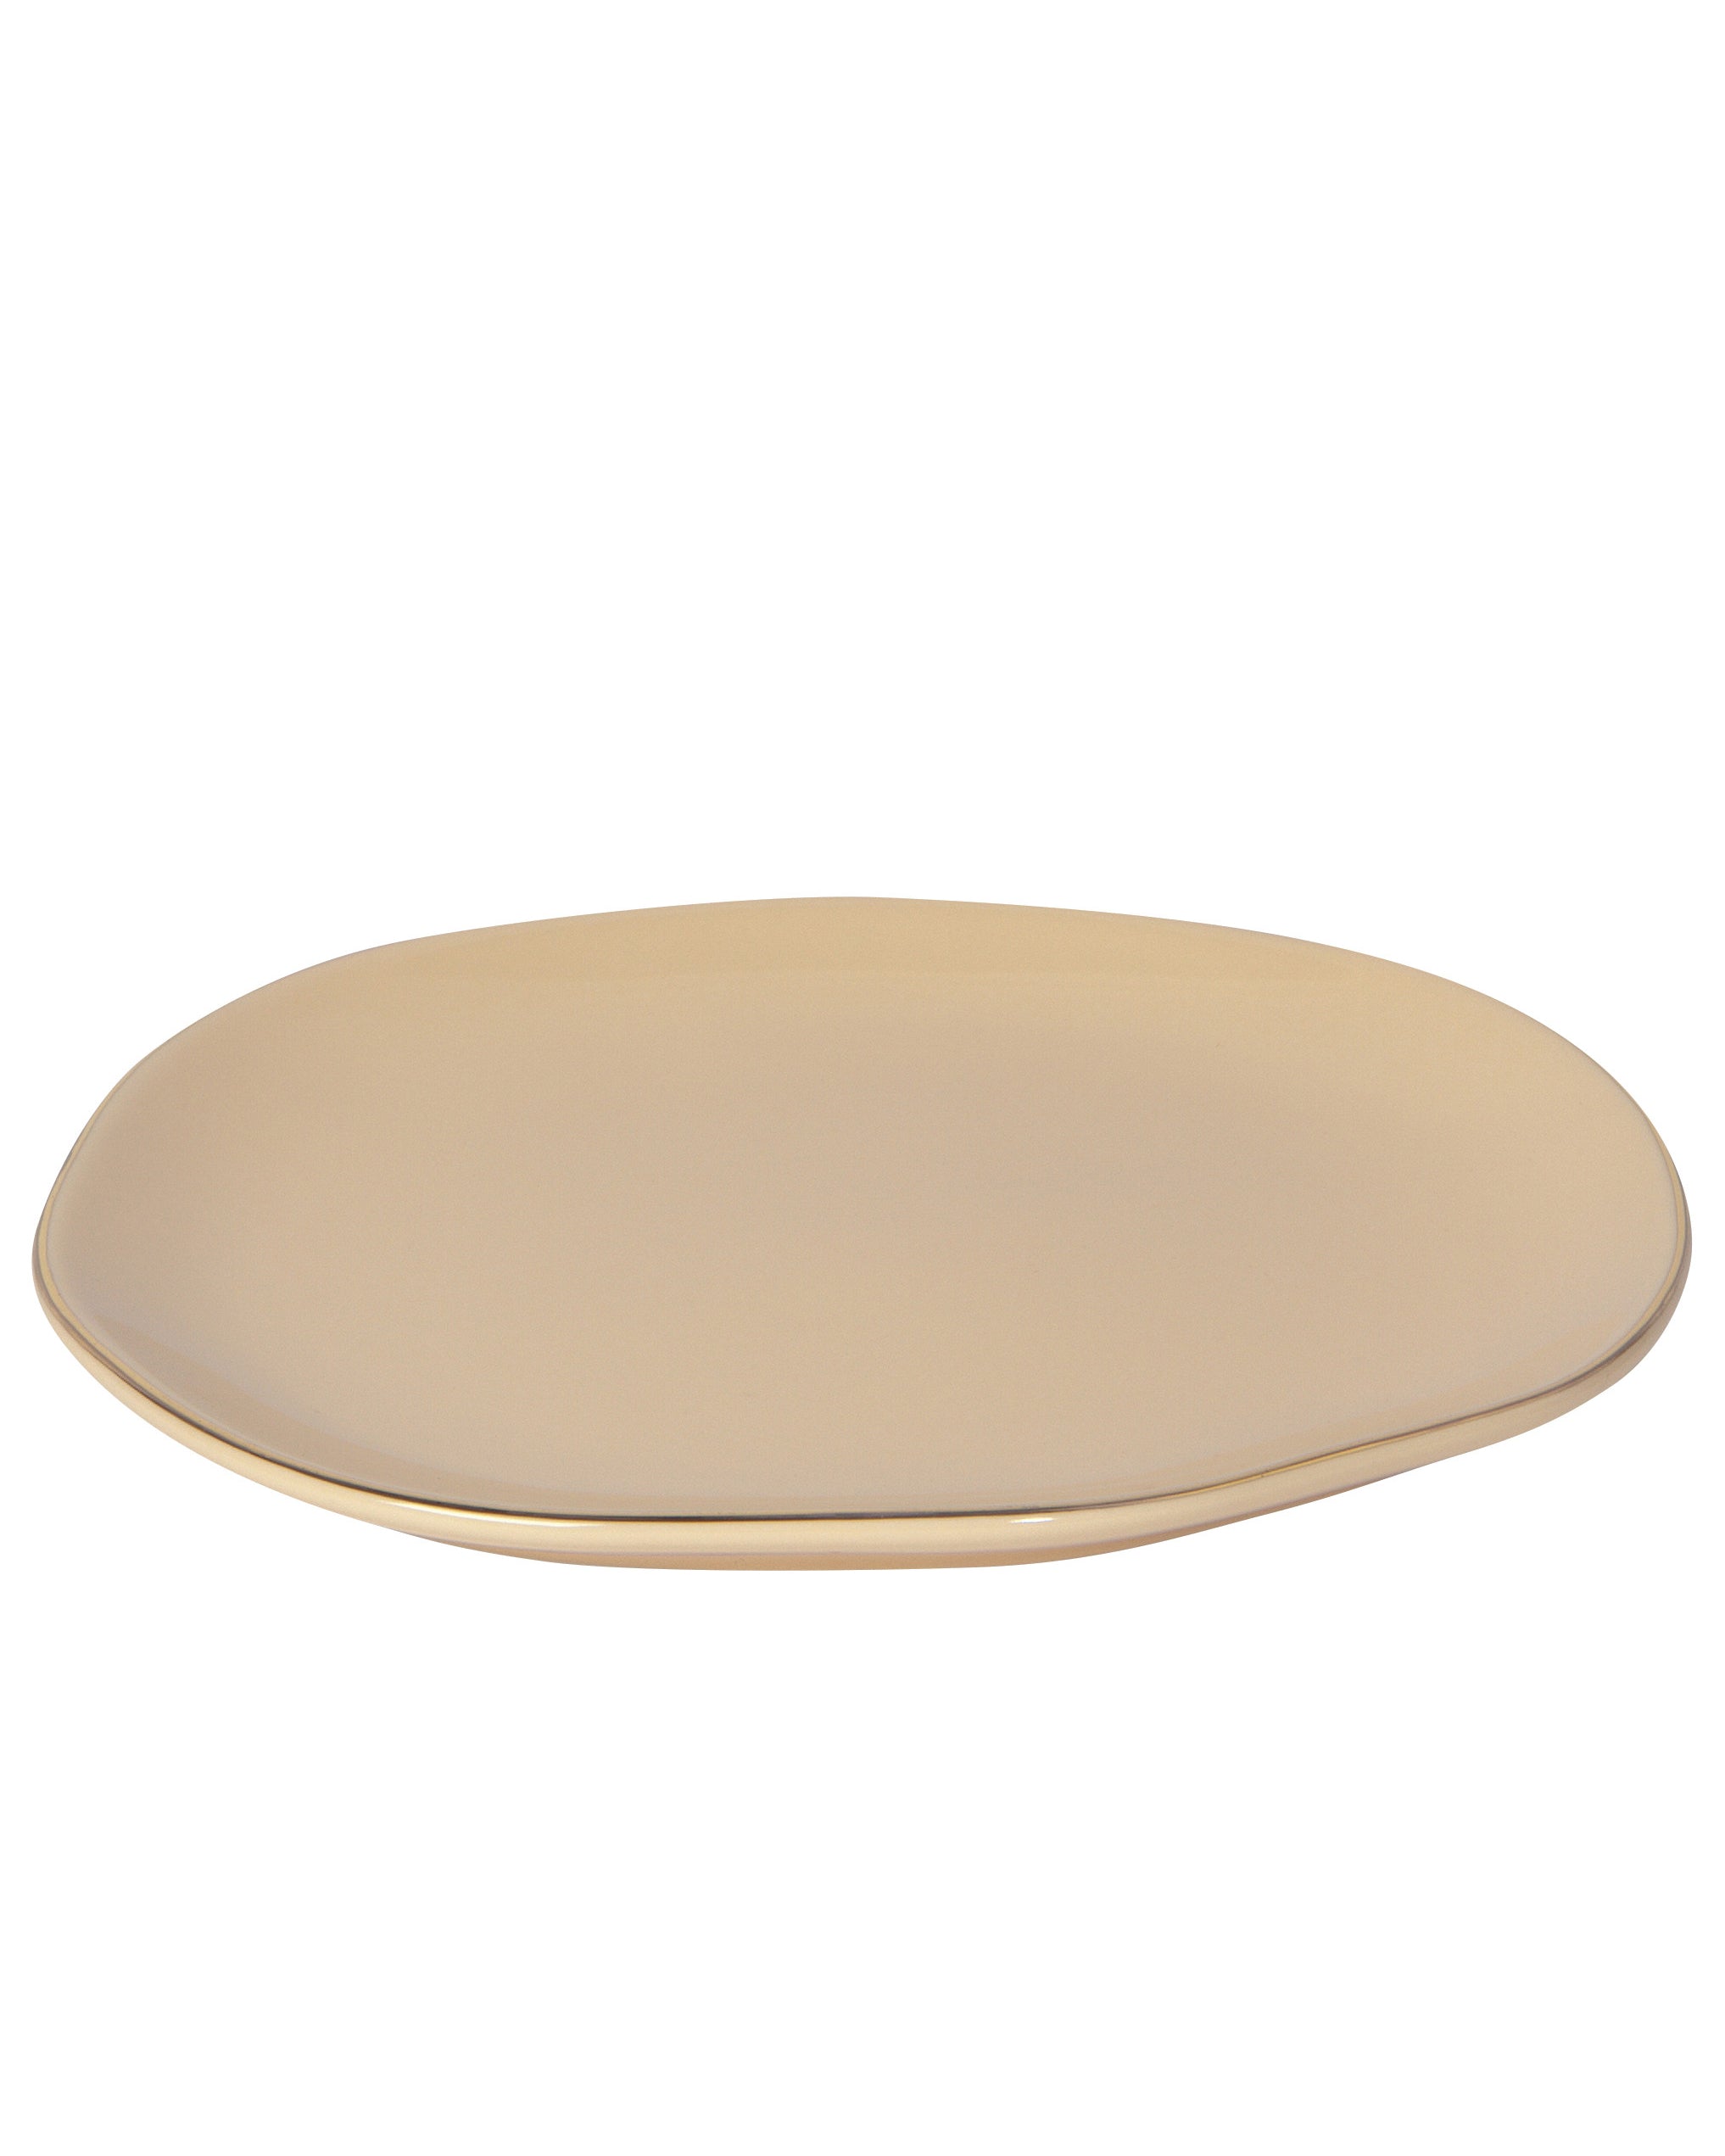 Danica Designs Flight Pebble Appetizer Plates Set of 4